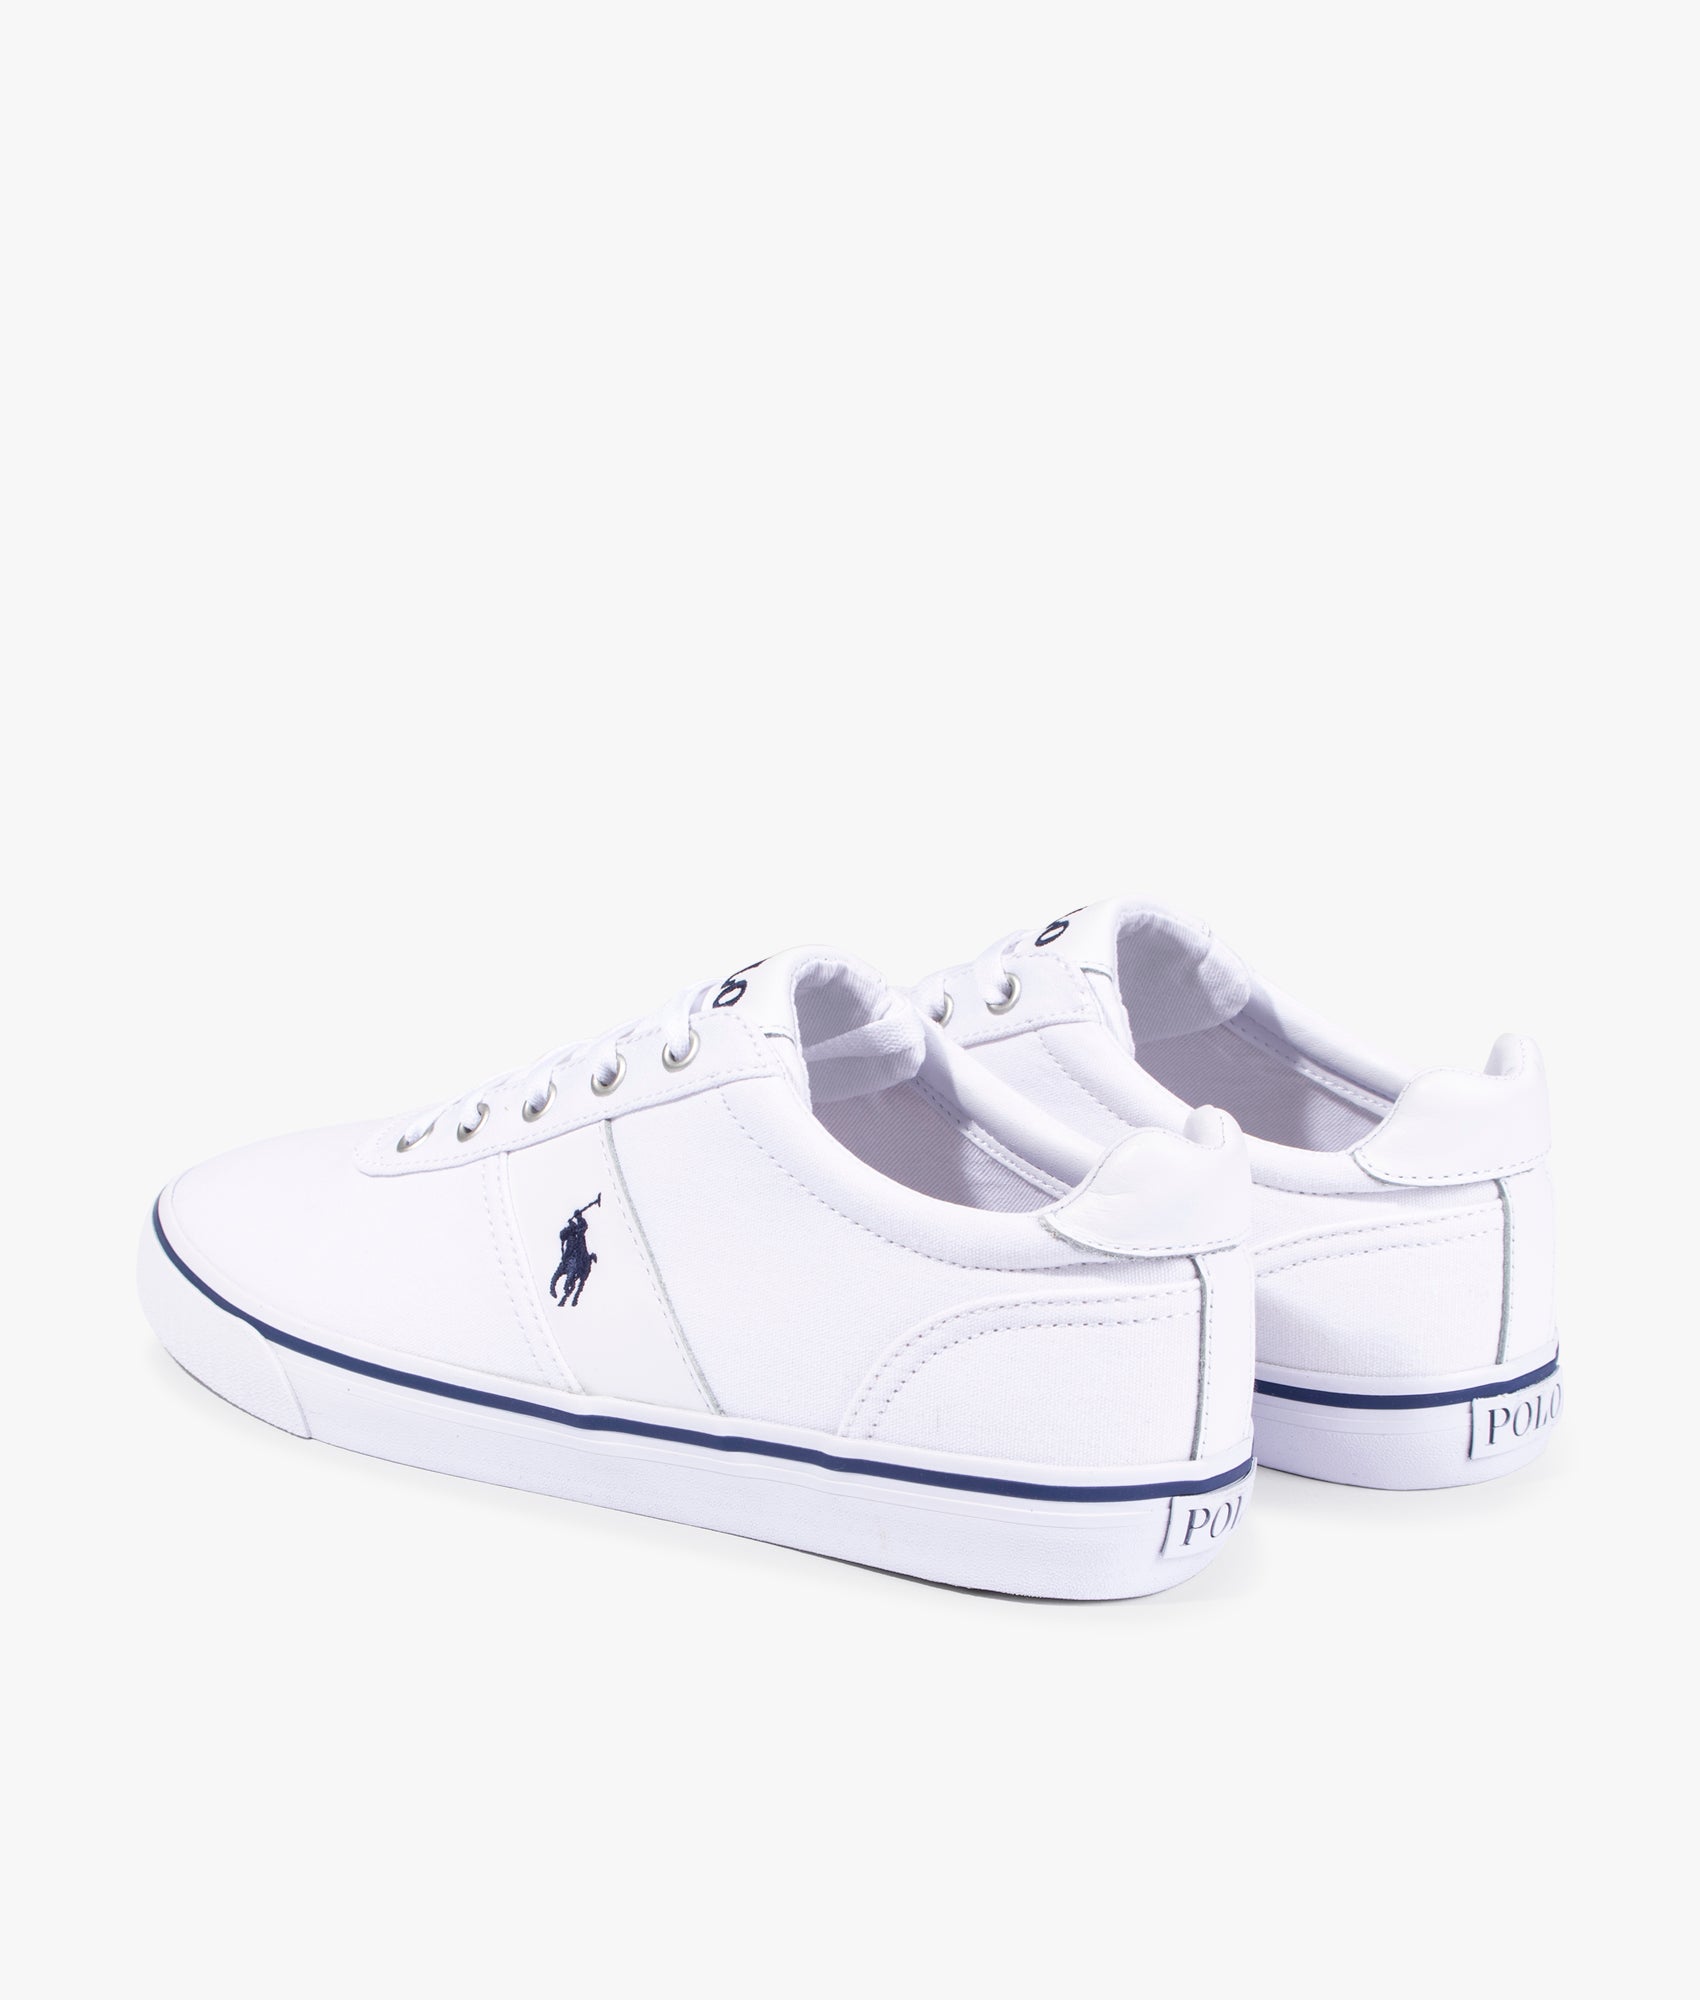 Hanford Canvas Low Top Sneakers White Navy | Polo Ralph Lauren | EQVVS